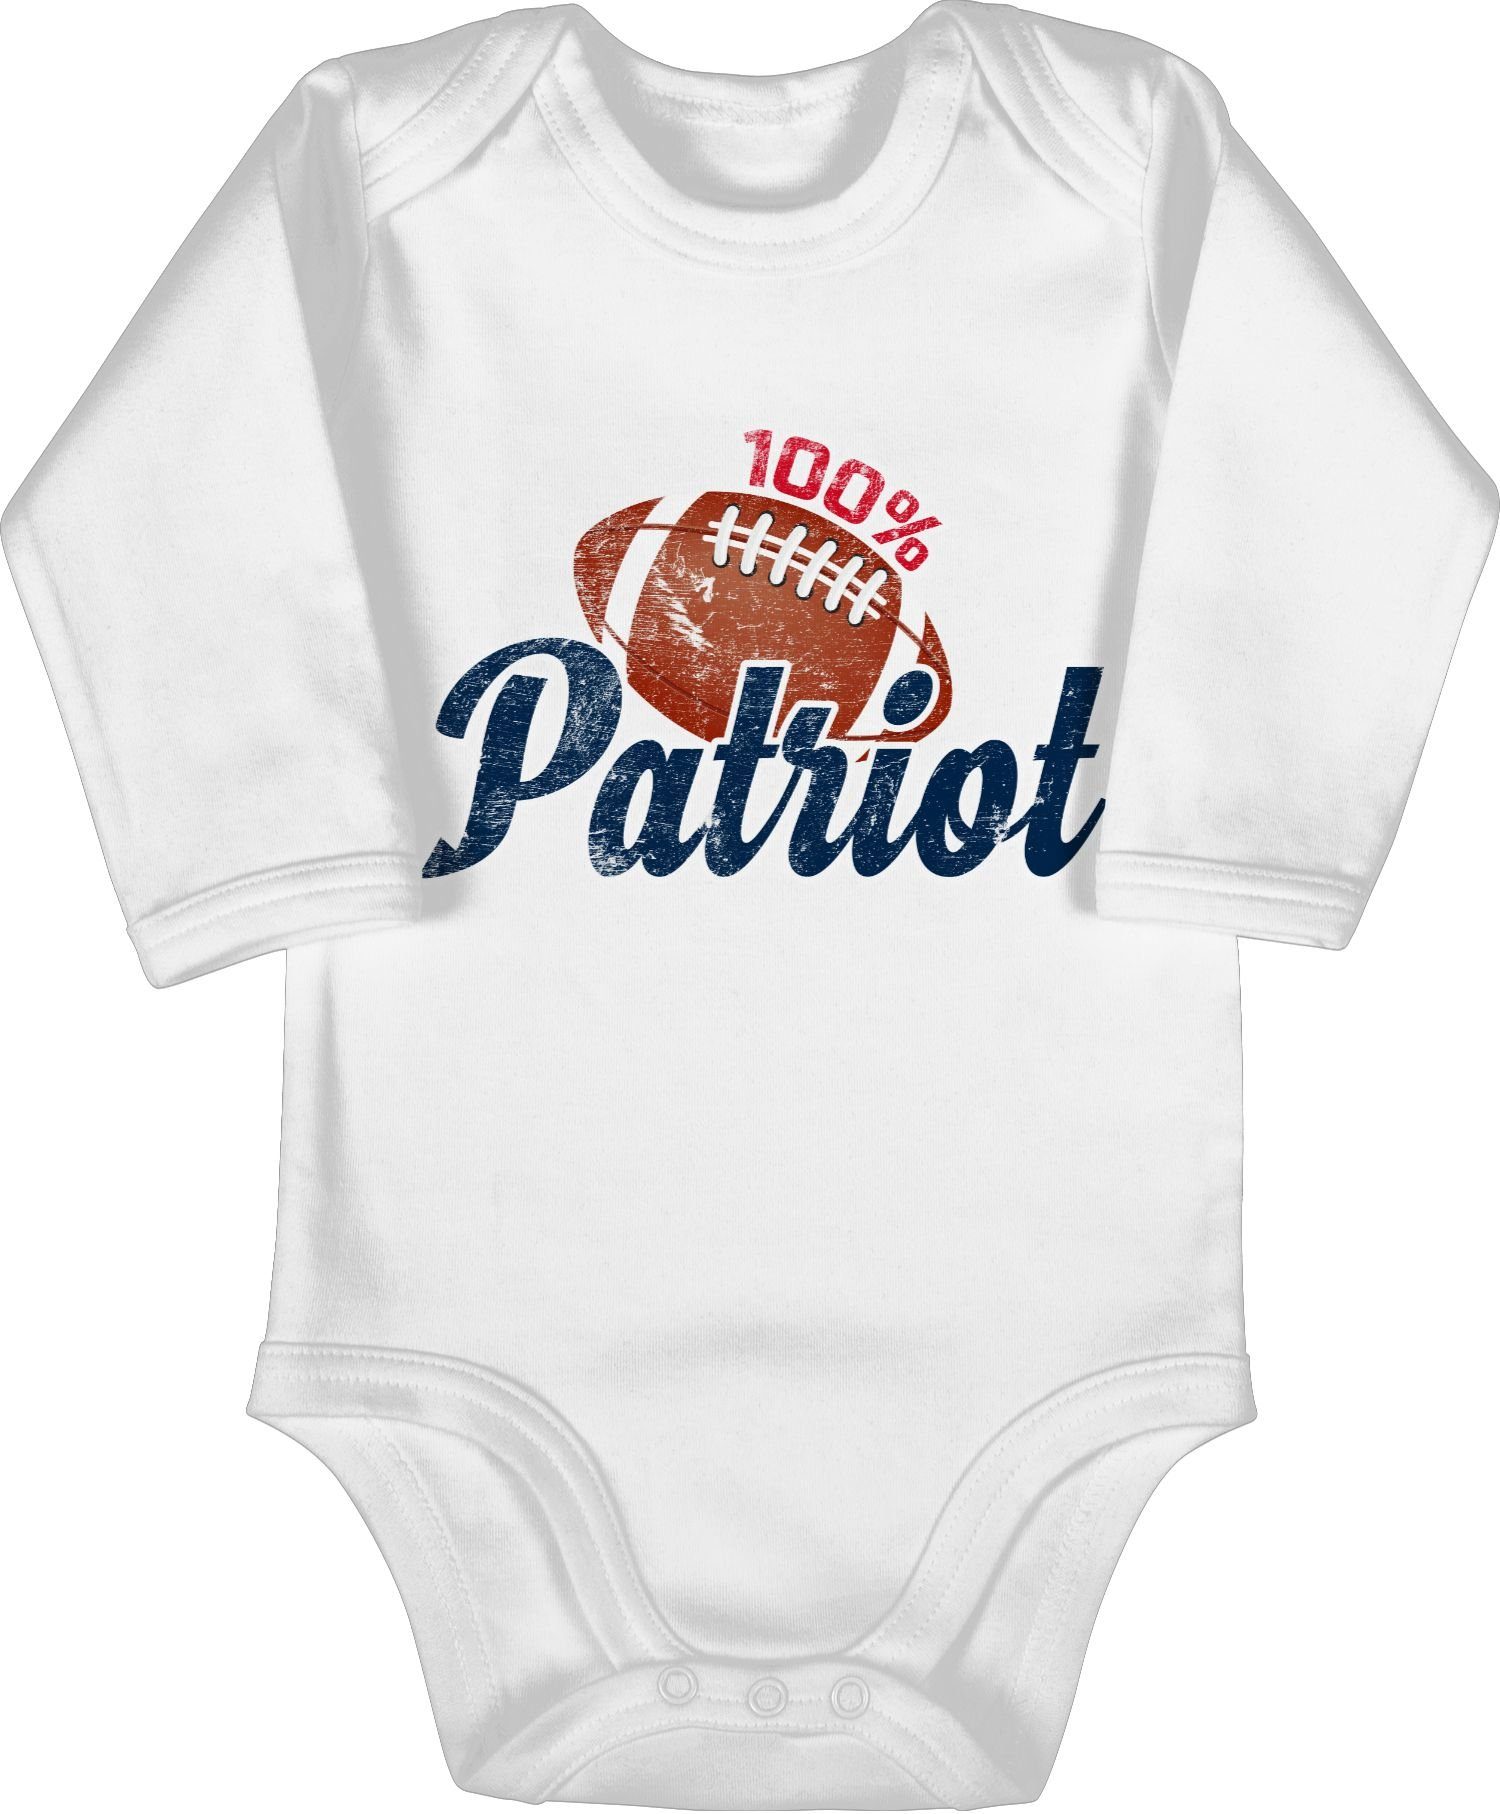 Shirtracer Shirtbody 100% Patriot Sport & Bewegung Baby